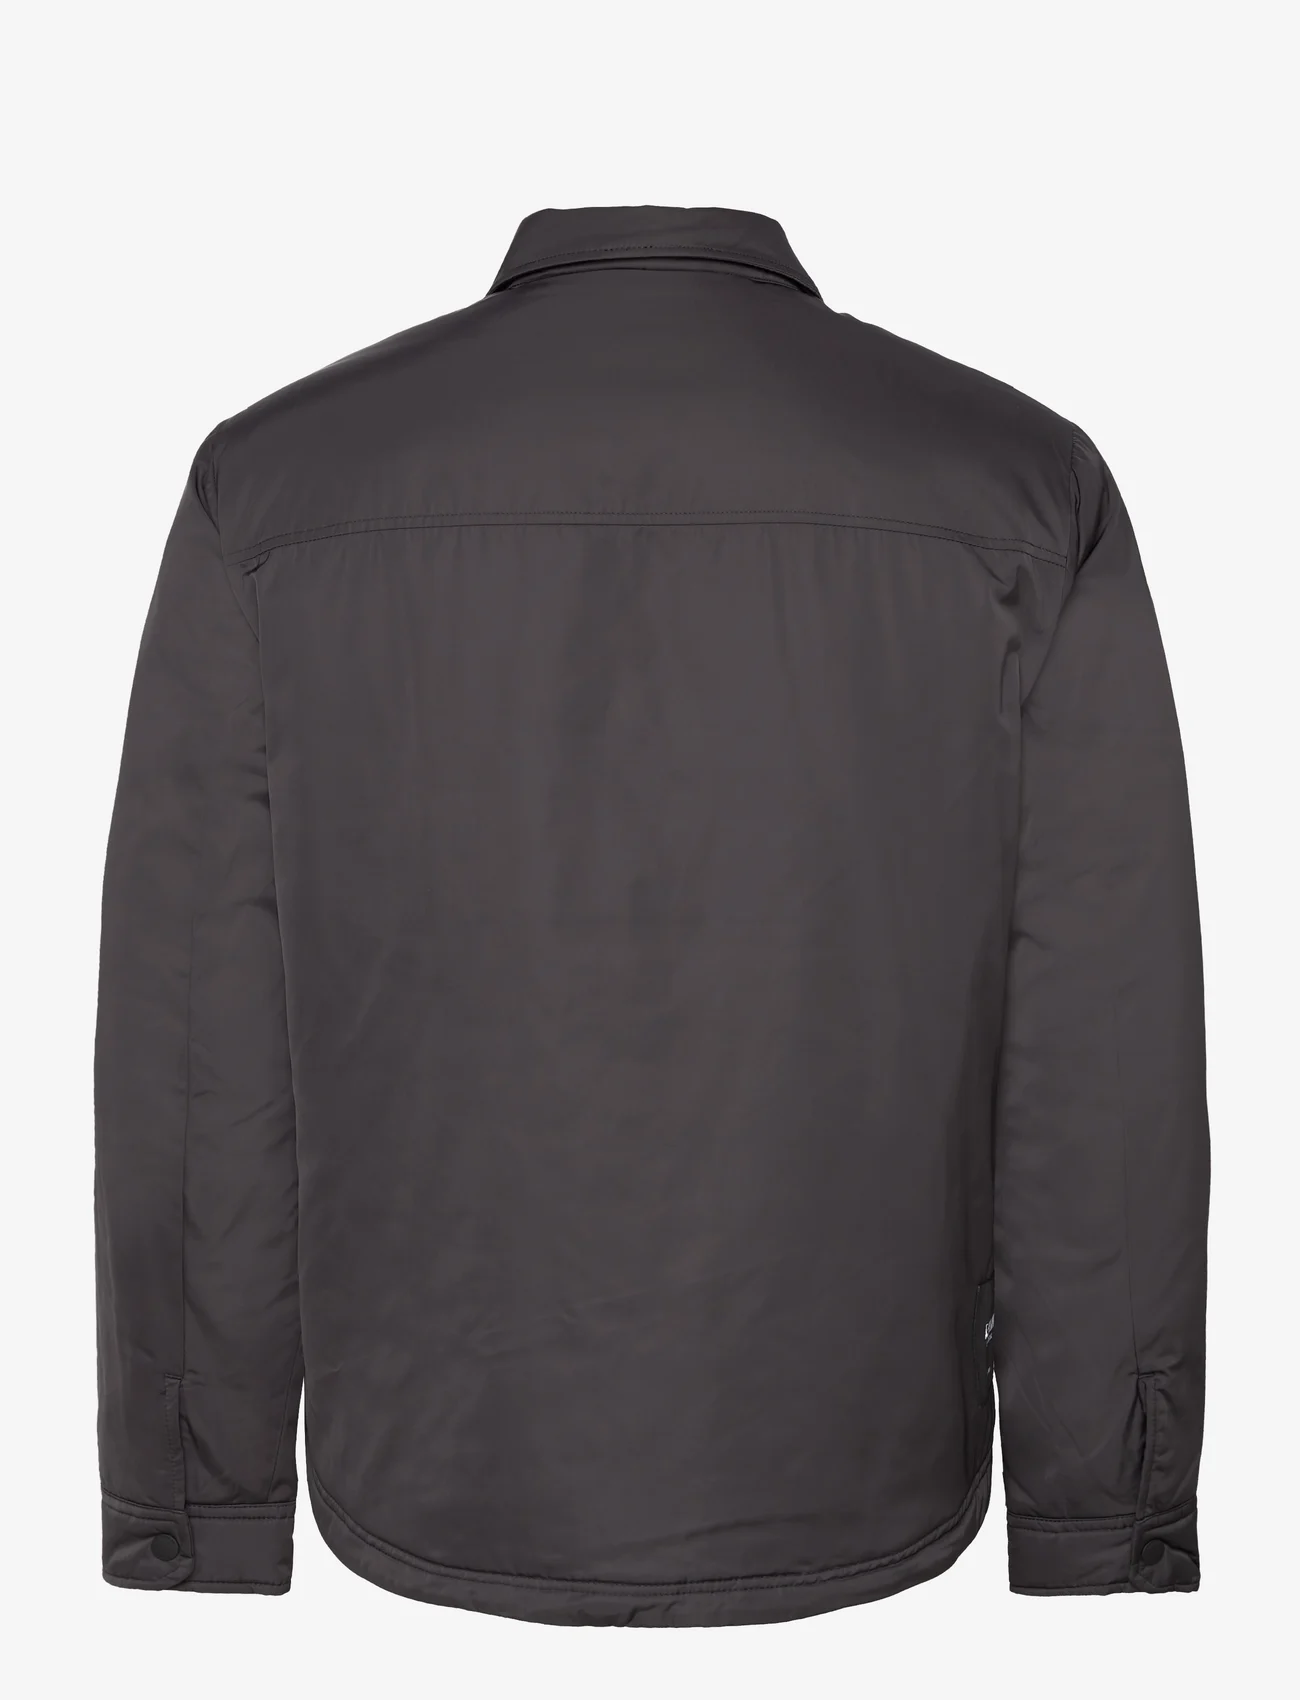 Replay - Jacket REGULAR Essential - lentejassen - black - 1